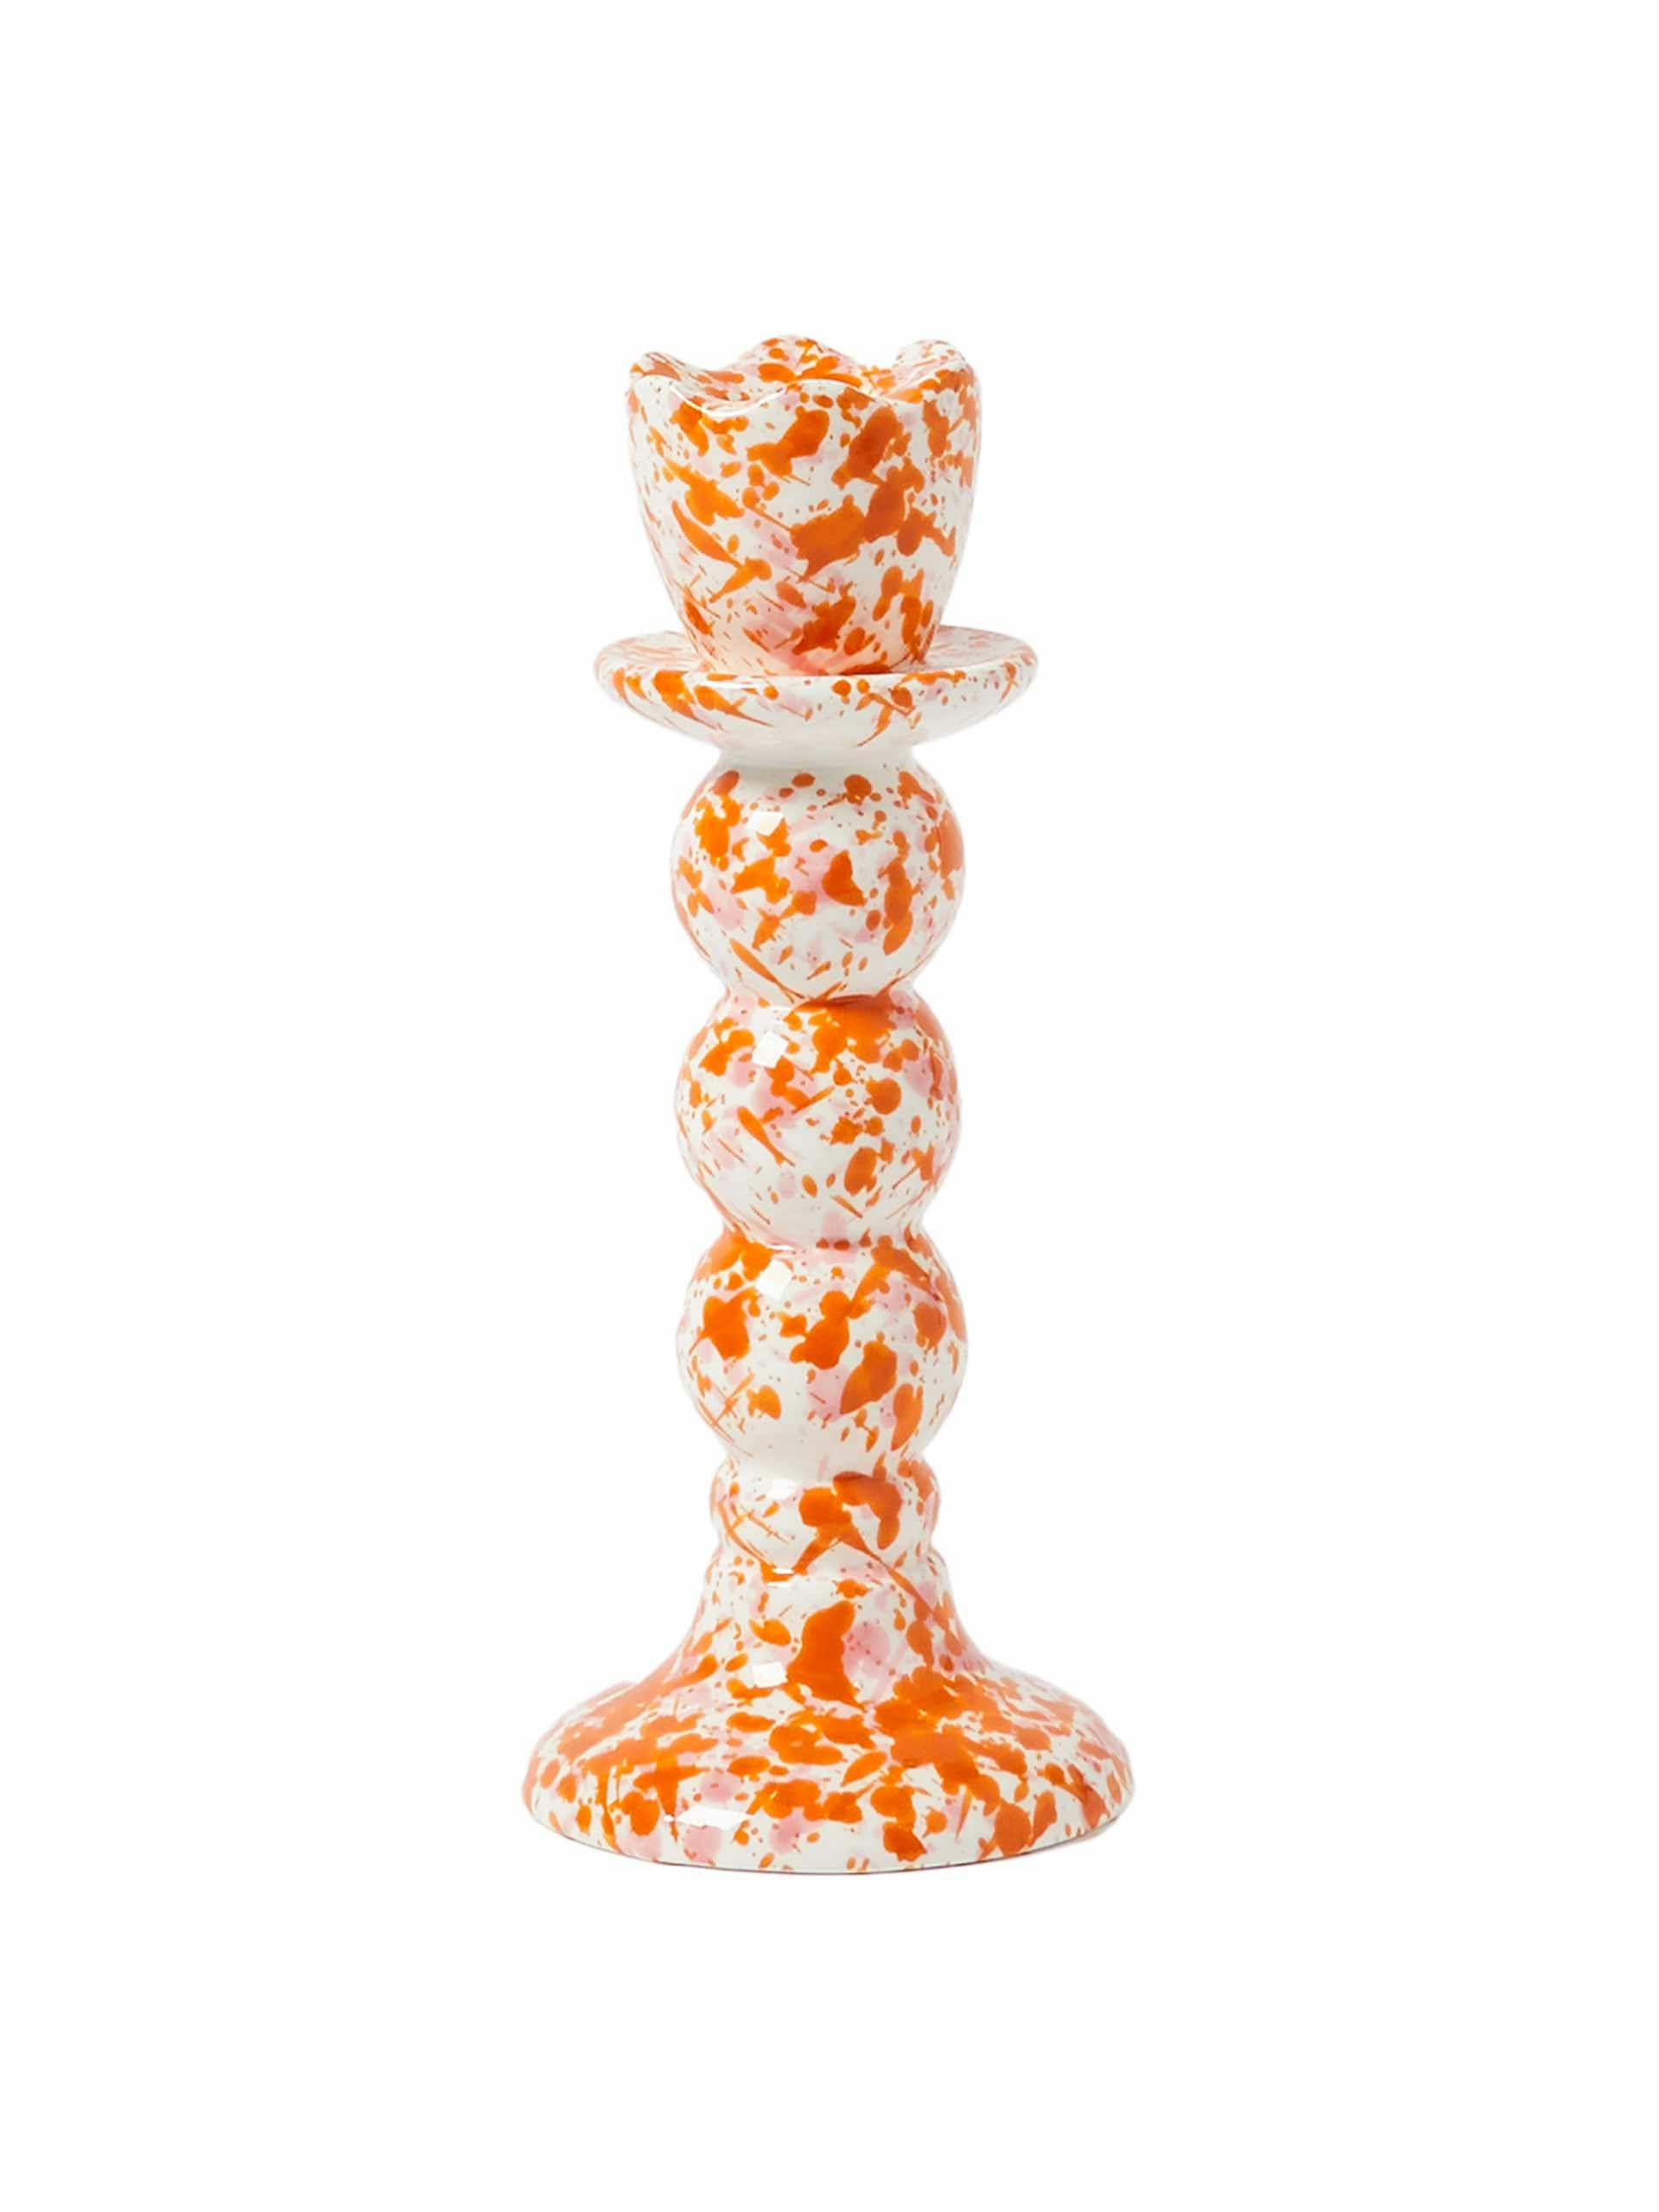 Splatter orange ceramic candlestick holder